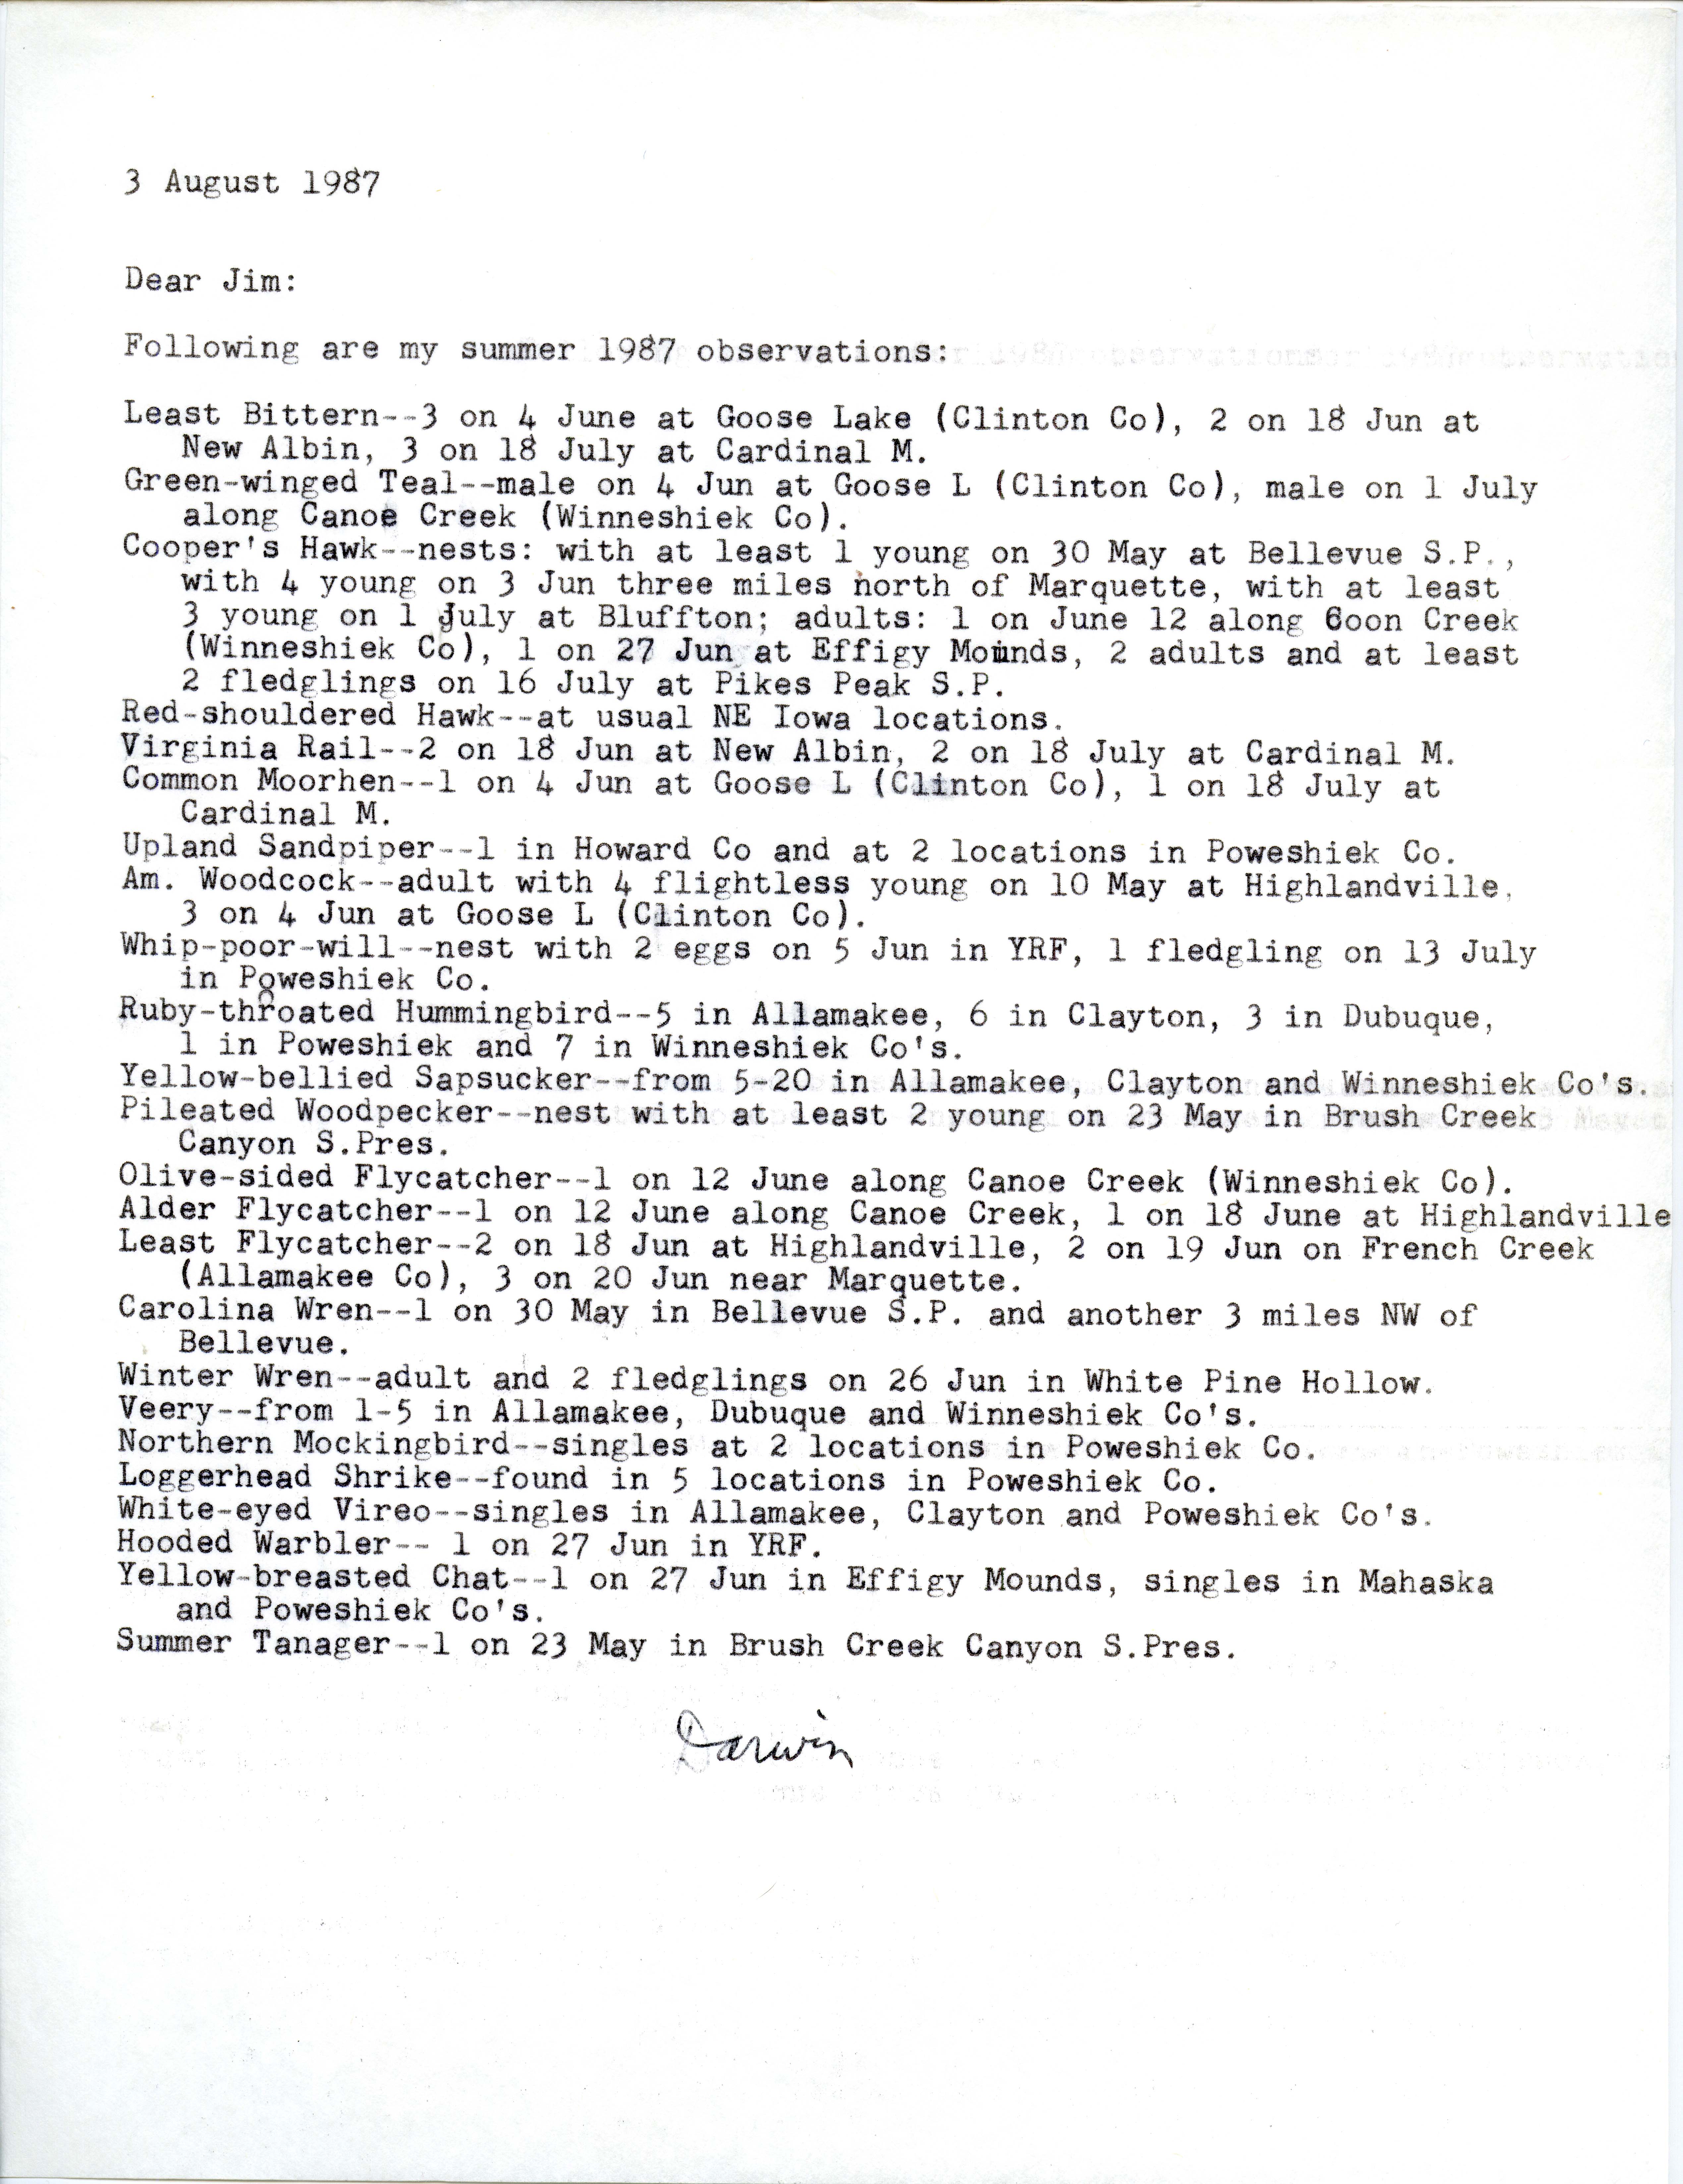 Darwin Koenig letter to James J. Dinsmore regarding summer bird sightings, August 3, 1987